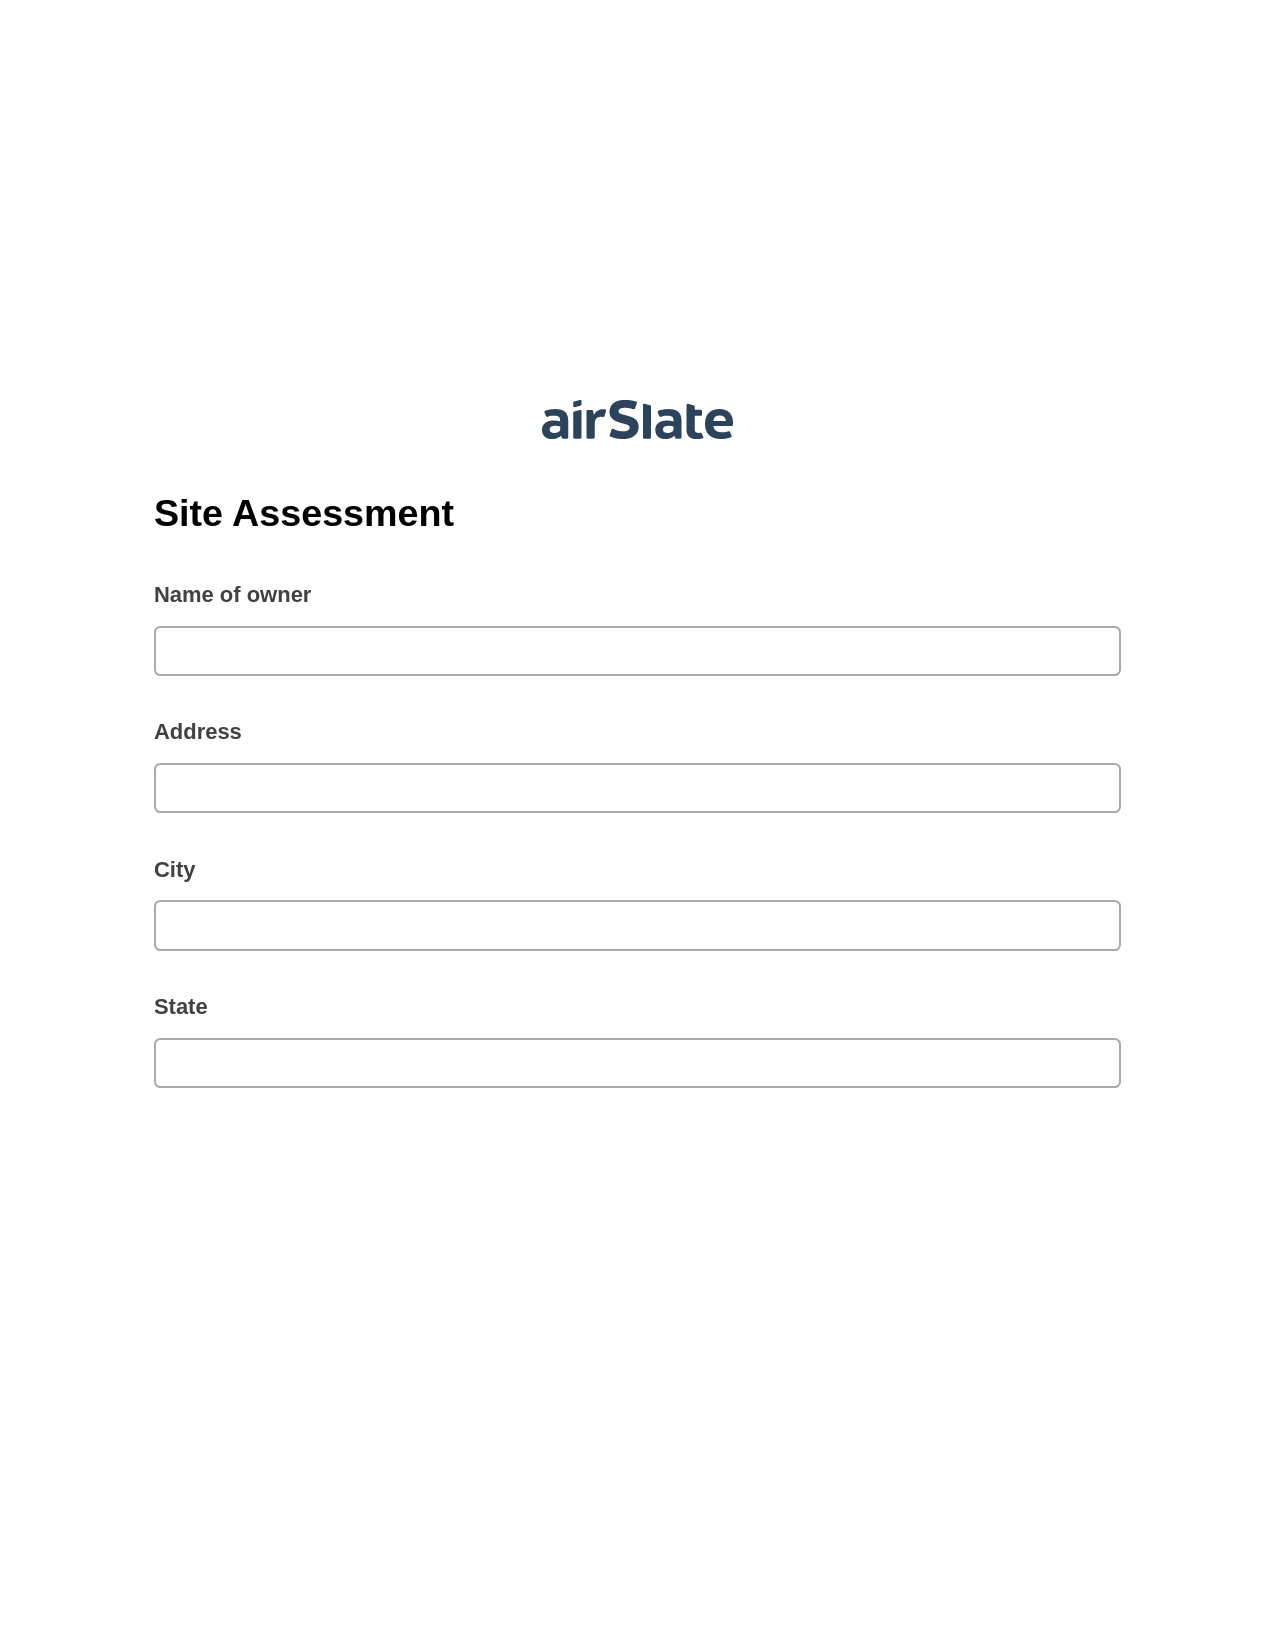 Multirole Site Assessment Pre-fill Slate from MS Dynamics 365 Records Bot, Audit Trail Bot, Box Bot